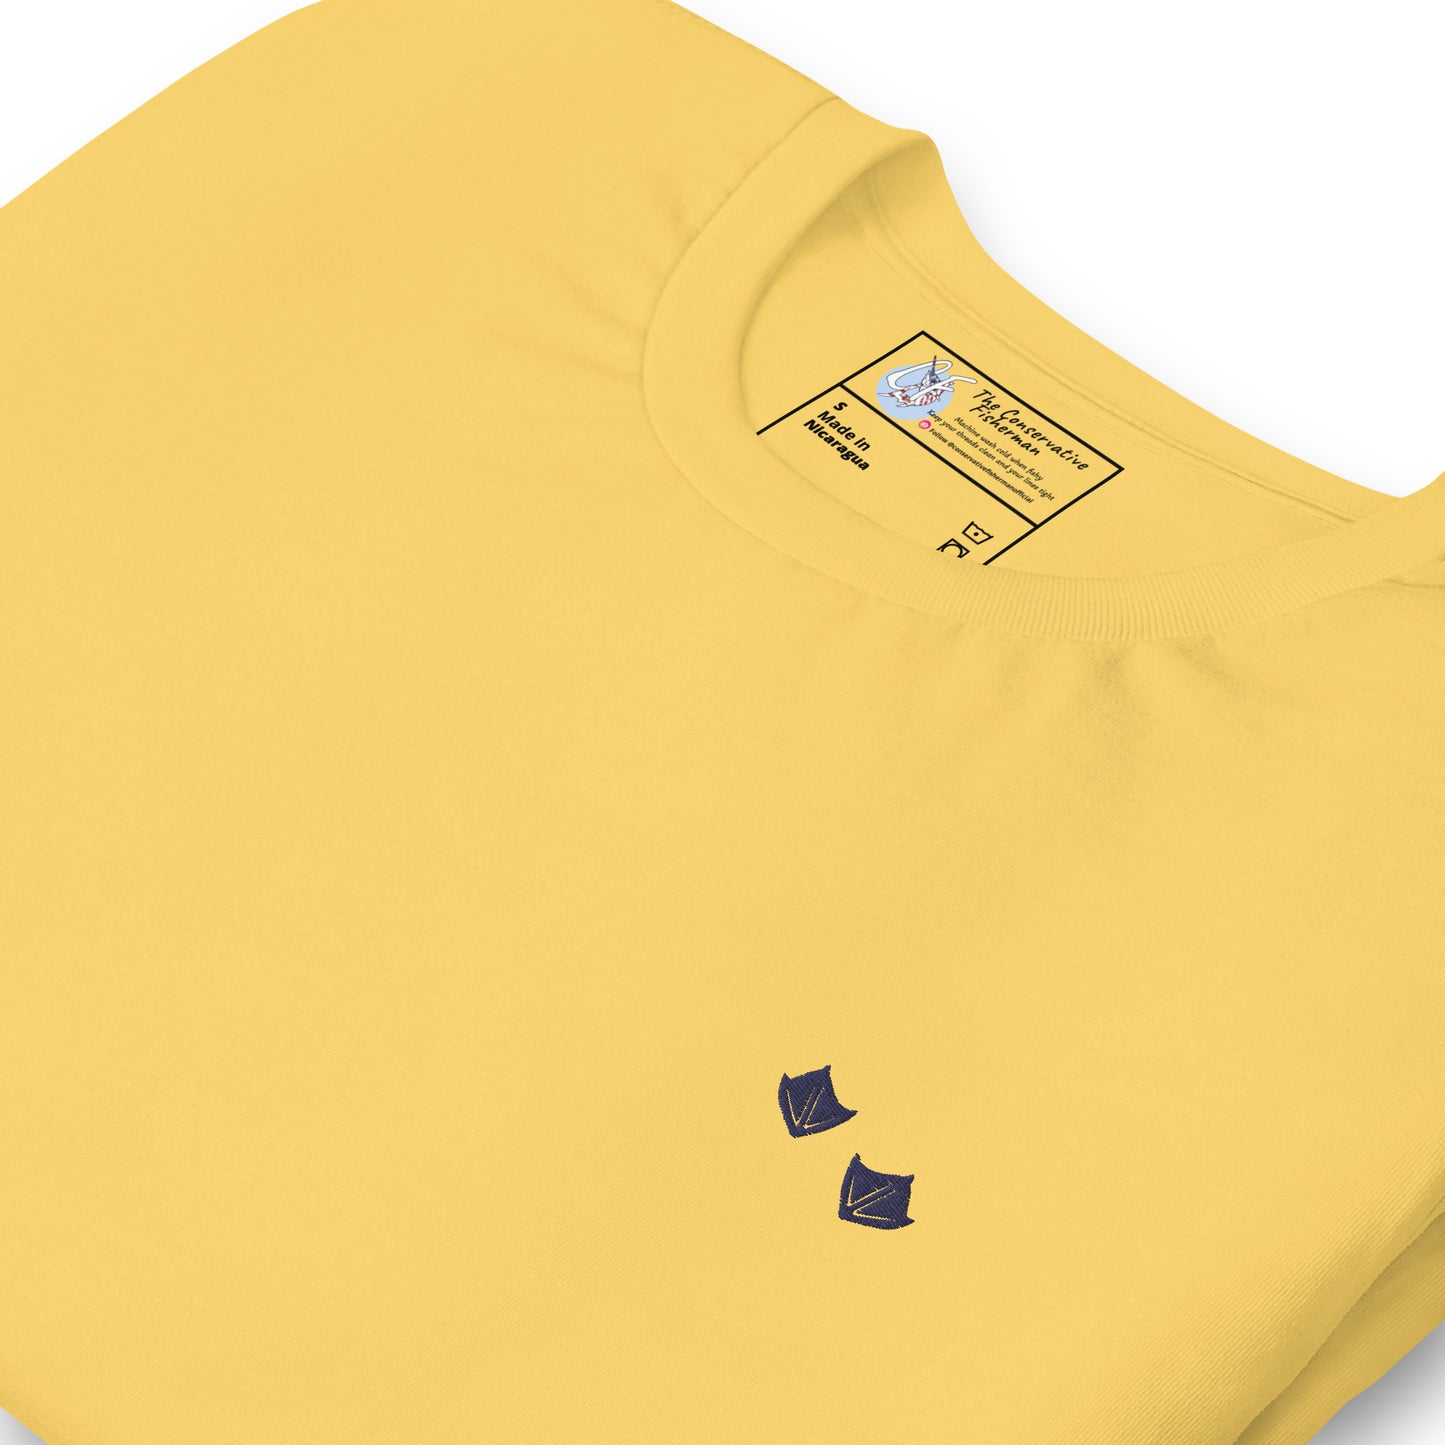 'Duck Prints' Premium Embroidered Shirt